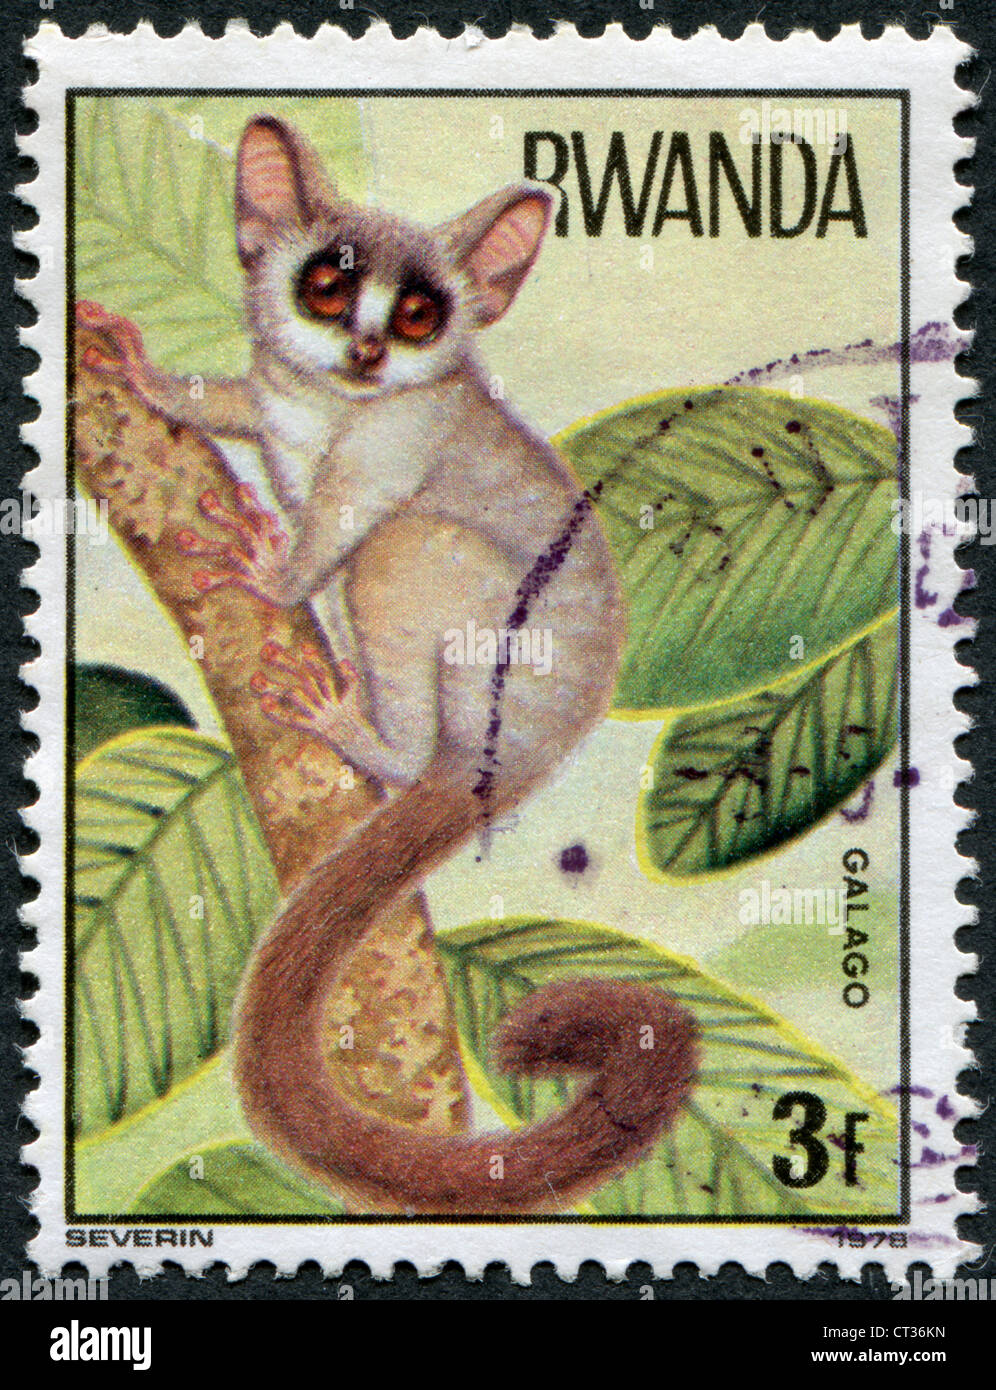 RWANDA - CIRCA 1978: A stamp printed in the Rwanda, depicts a monkey Galago, circa 1978 Stock Photo